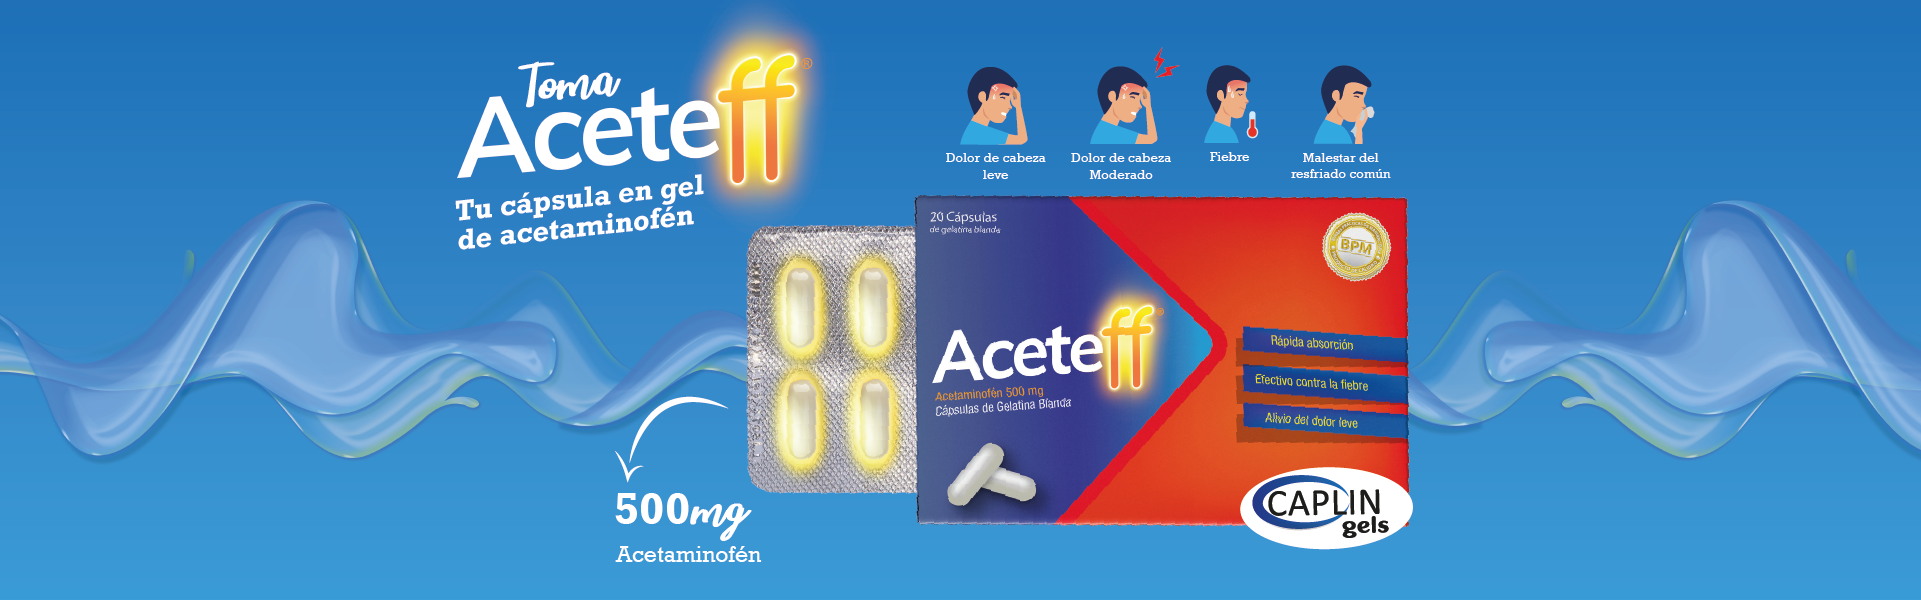 AceteffGel